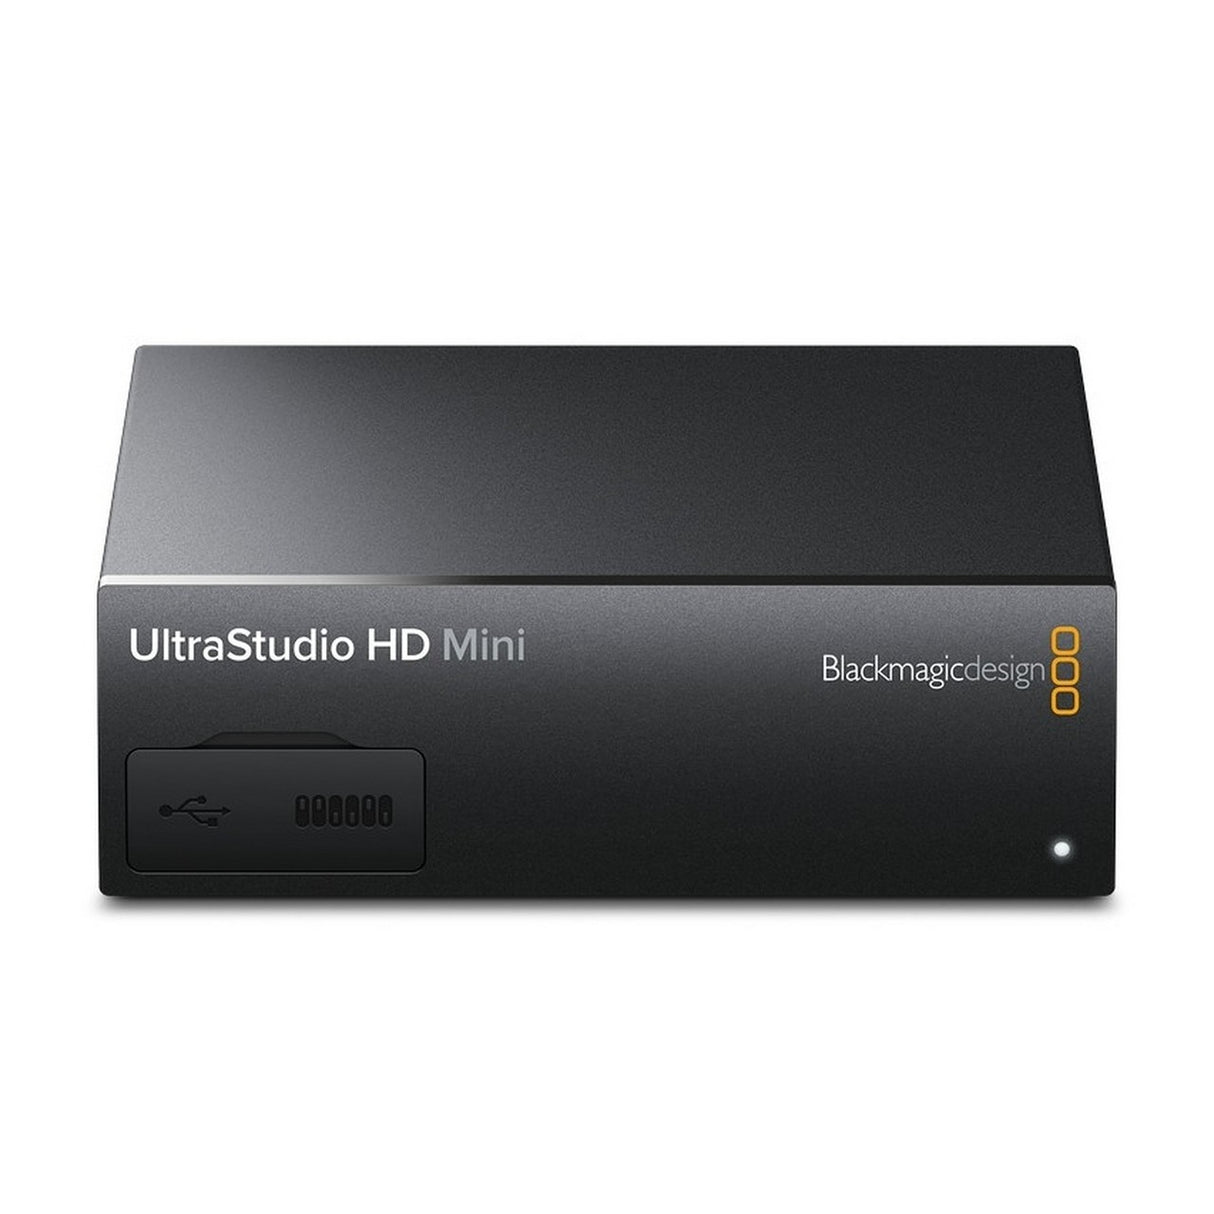 Blackmagic Design UltraStudio HD Mini Video Capture Playback Device (Used)